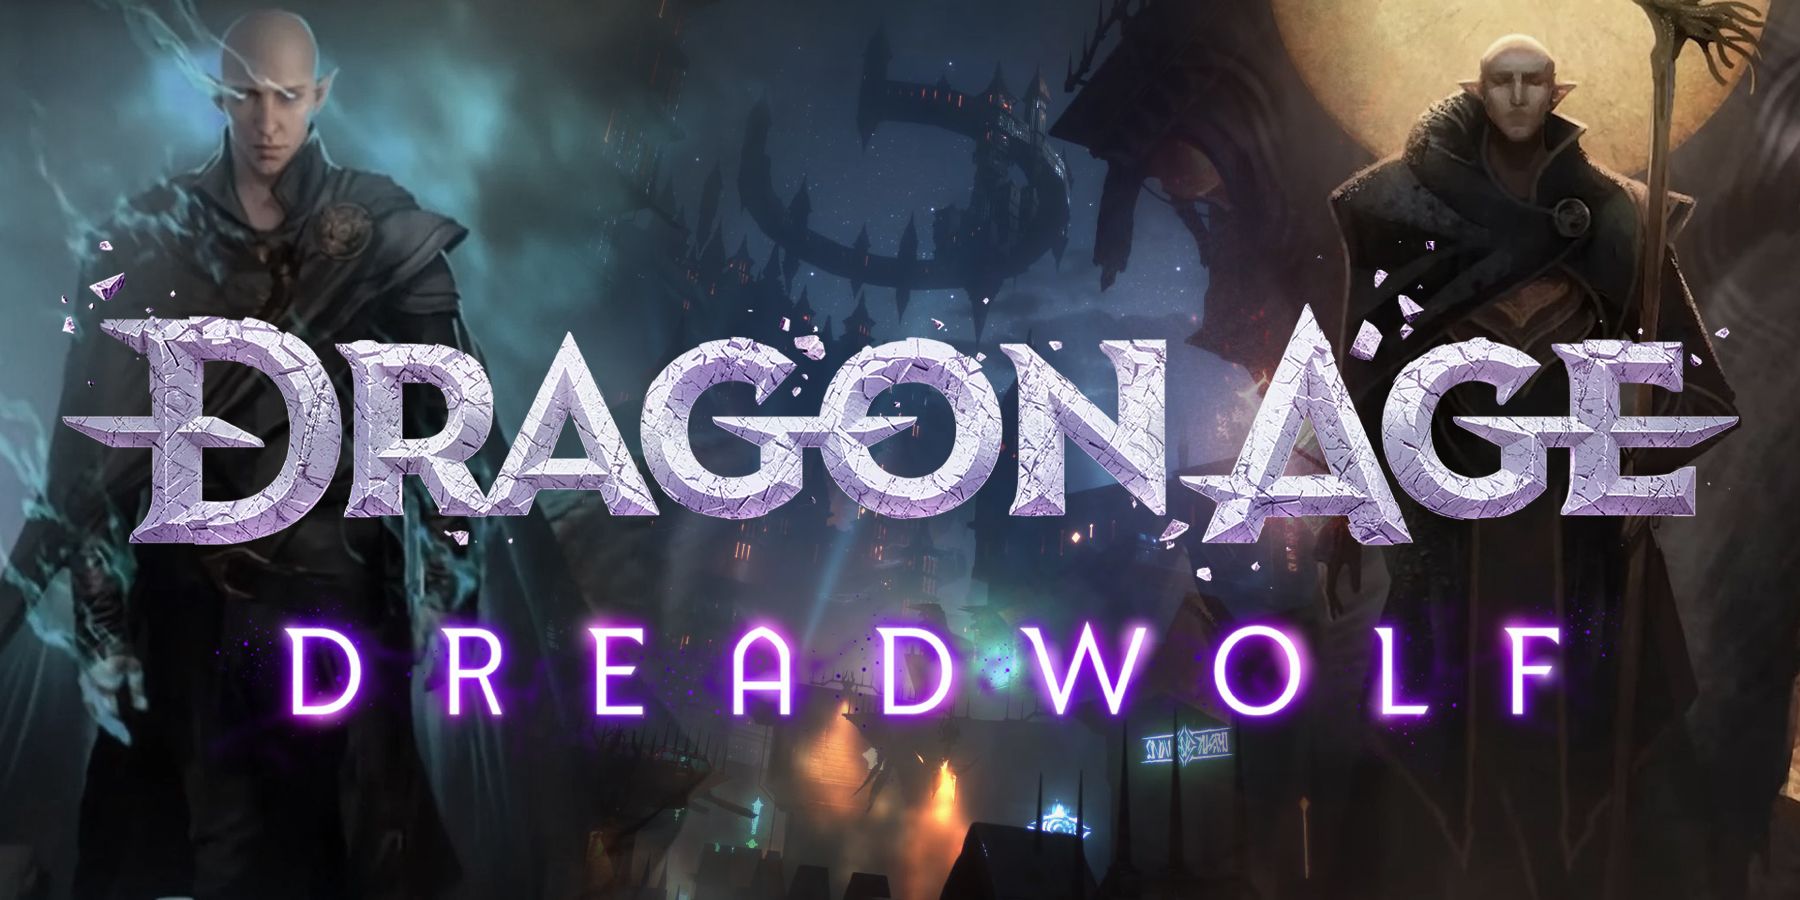 dragon-age-dreadwolf-tevinter-solas-fen-harel-promotional-logo-trailer